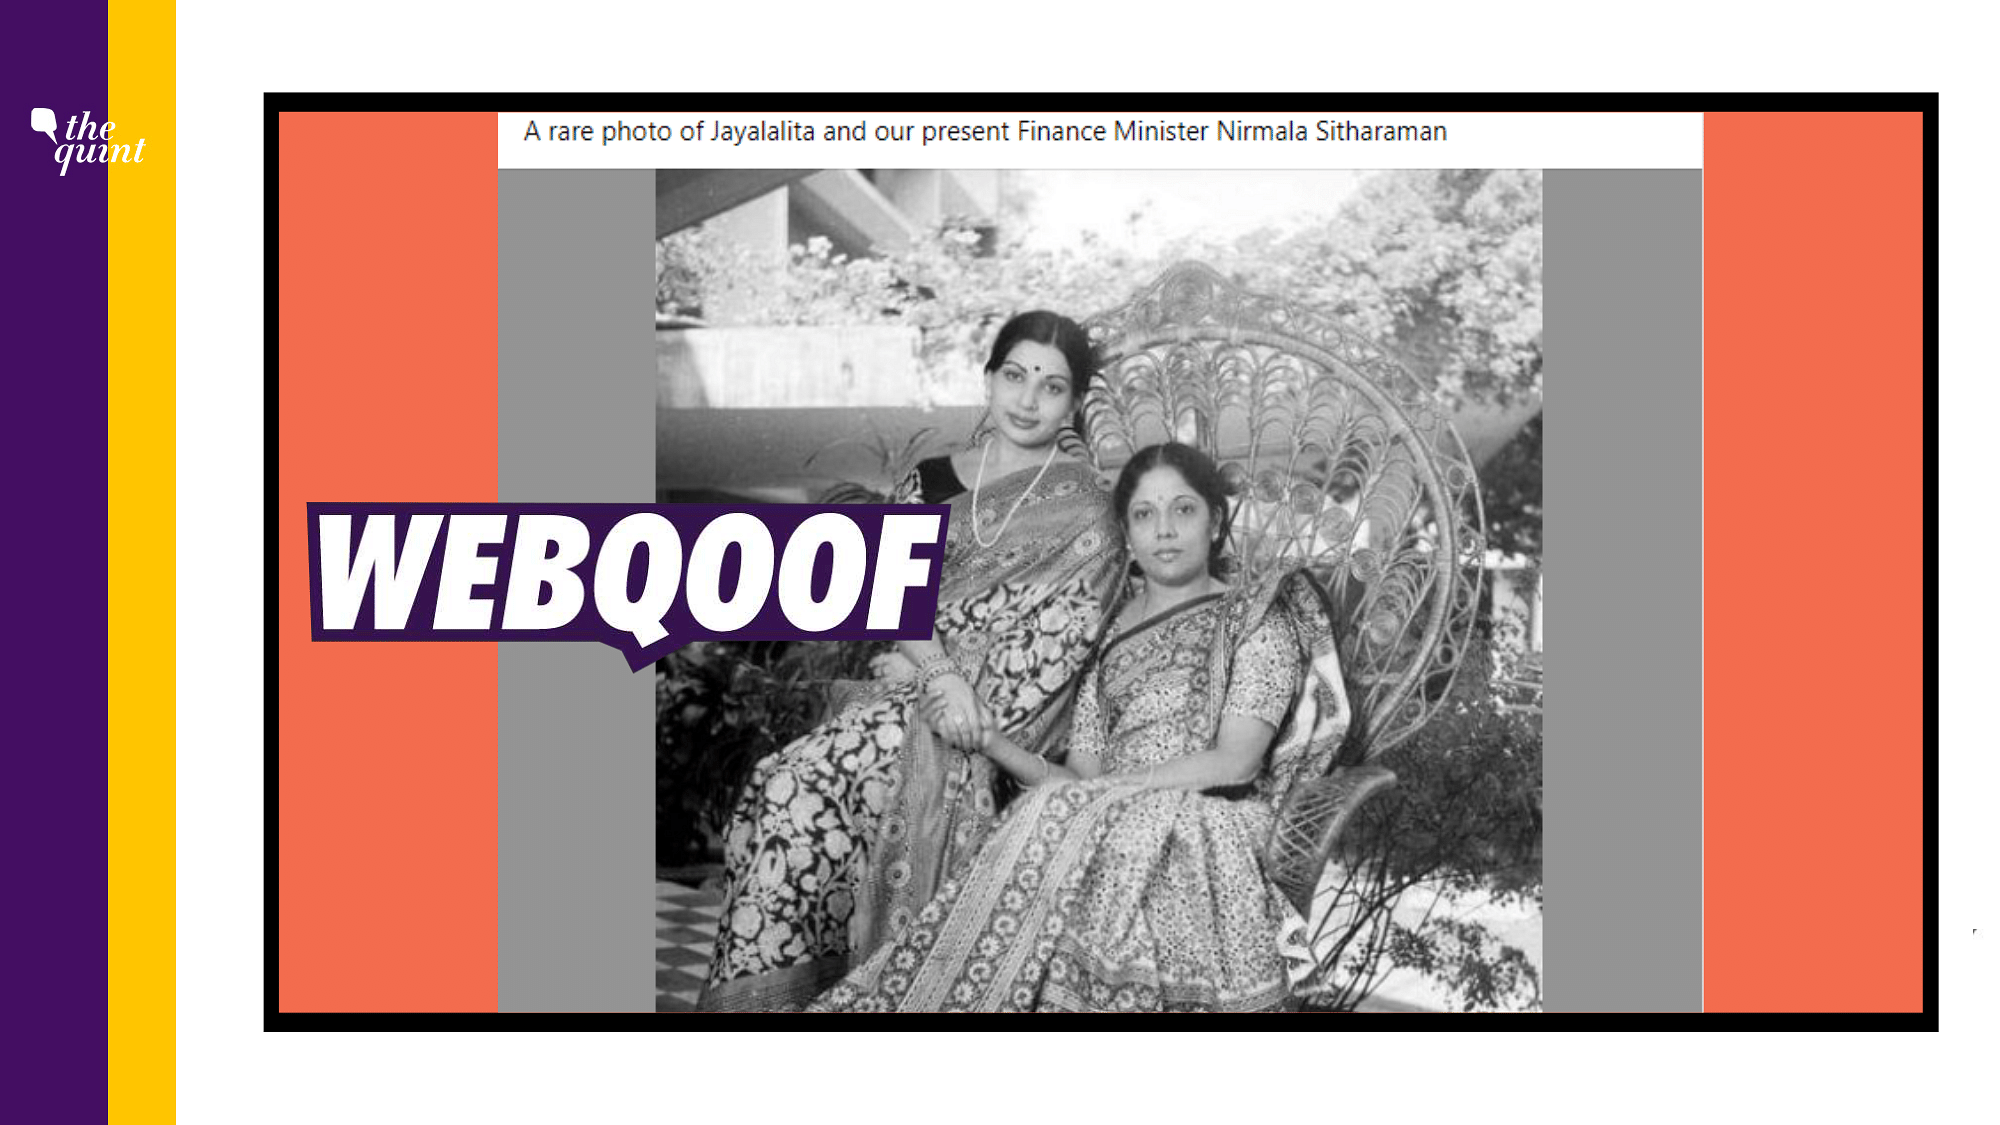  We found that the image showed Jayalalithaa sitting with Tamil writer Sivasankari and not Sitharaman.